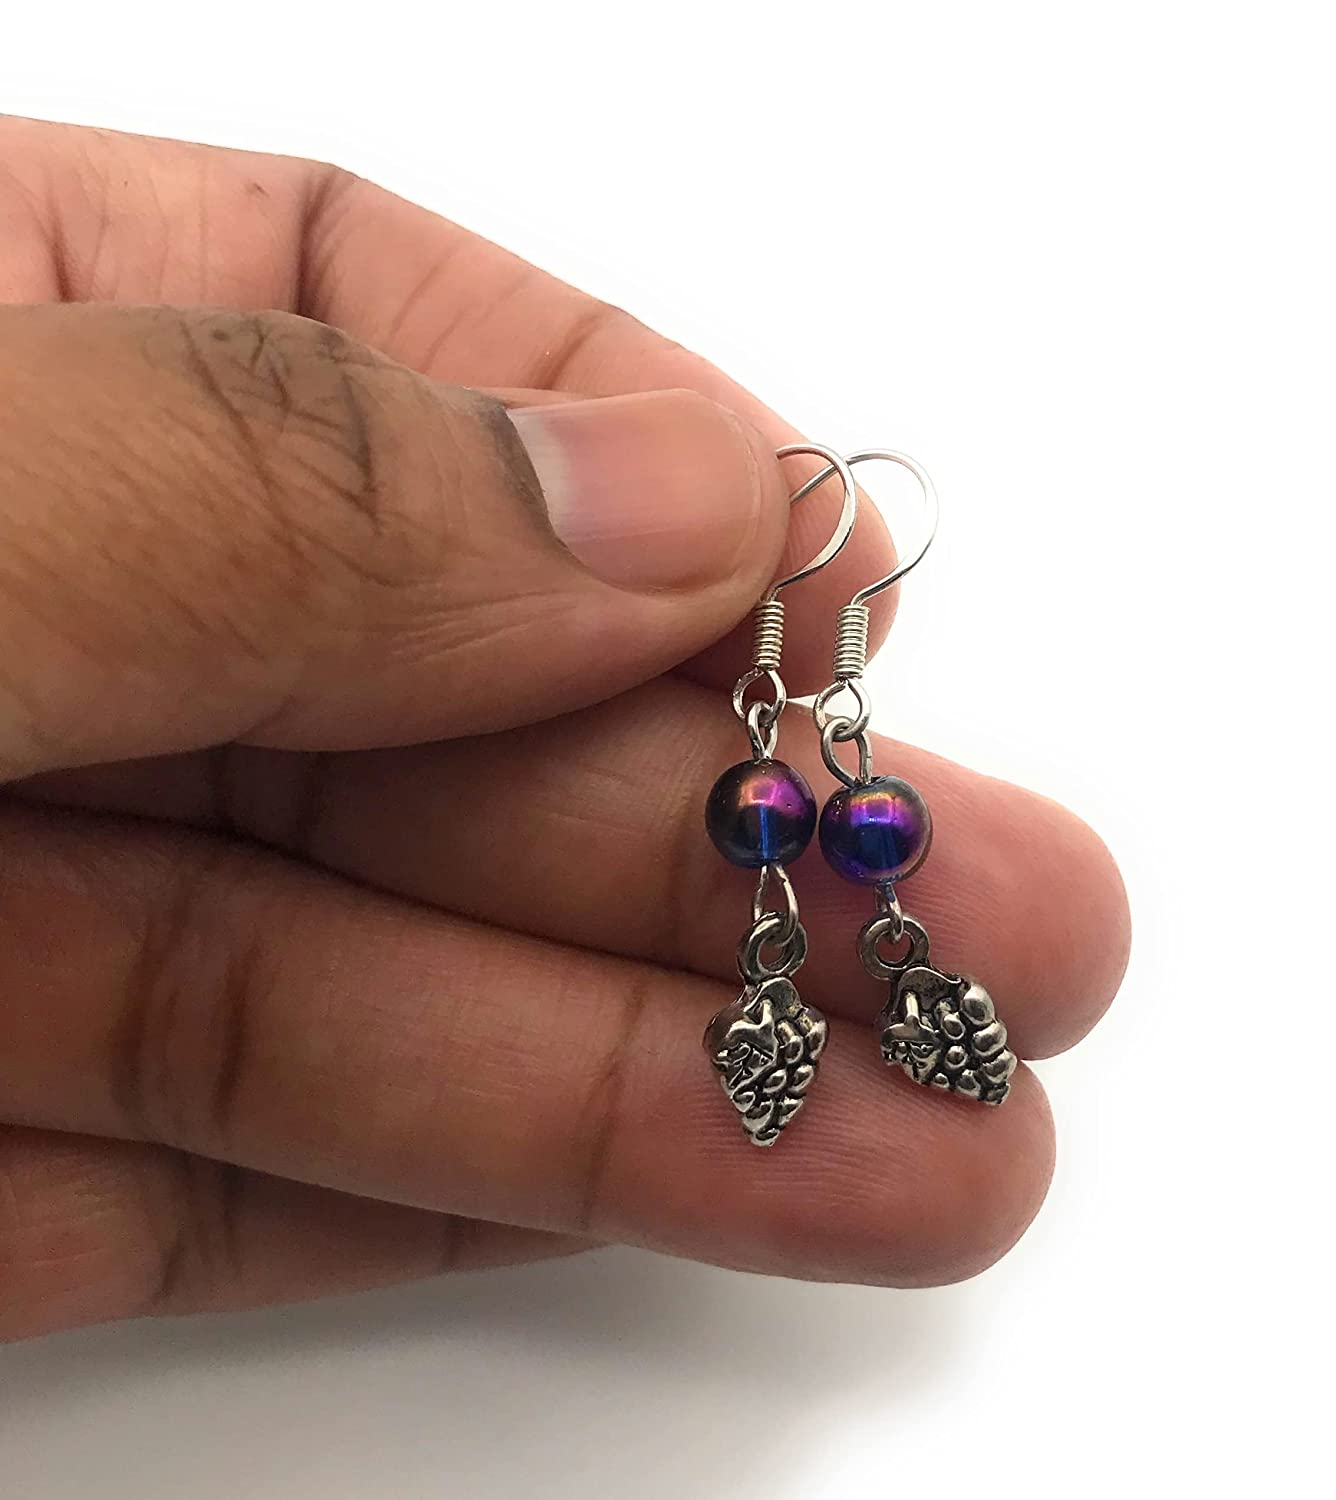 Bunch of Grapes Charm Purple Beaded Earrings Held by Fingertips from Scott D Jewelry